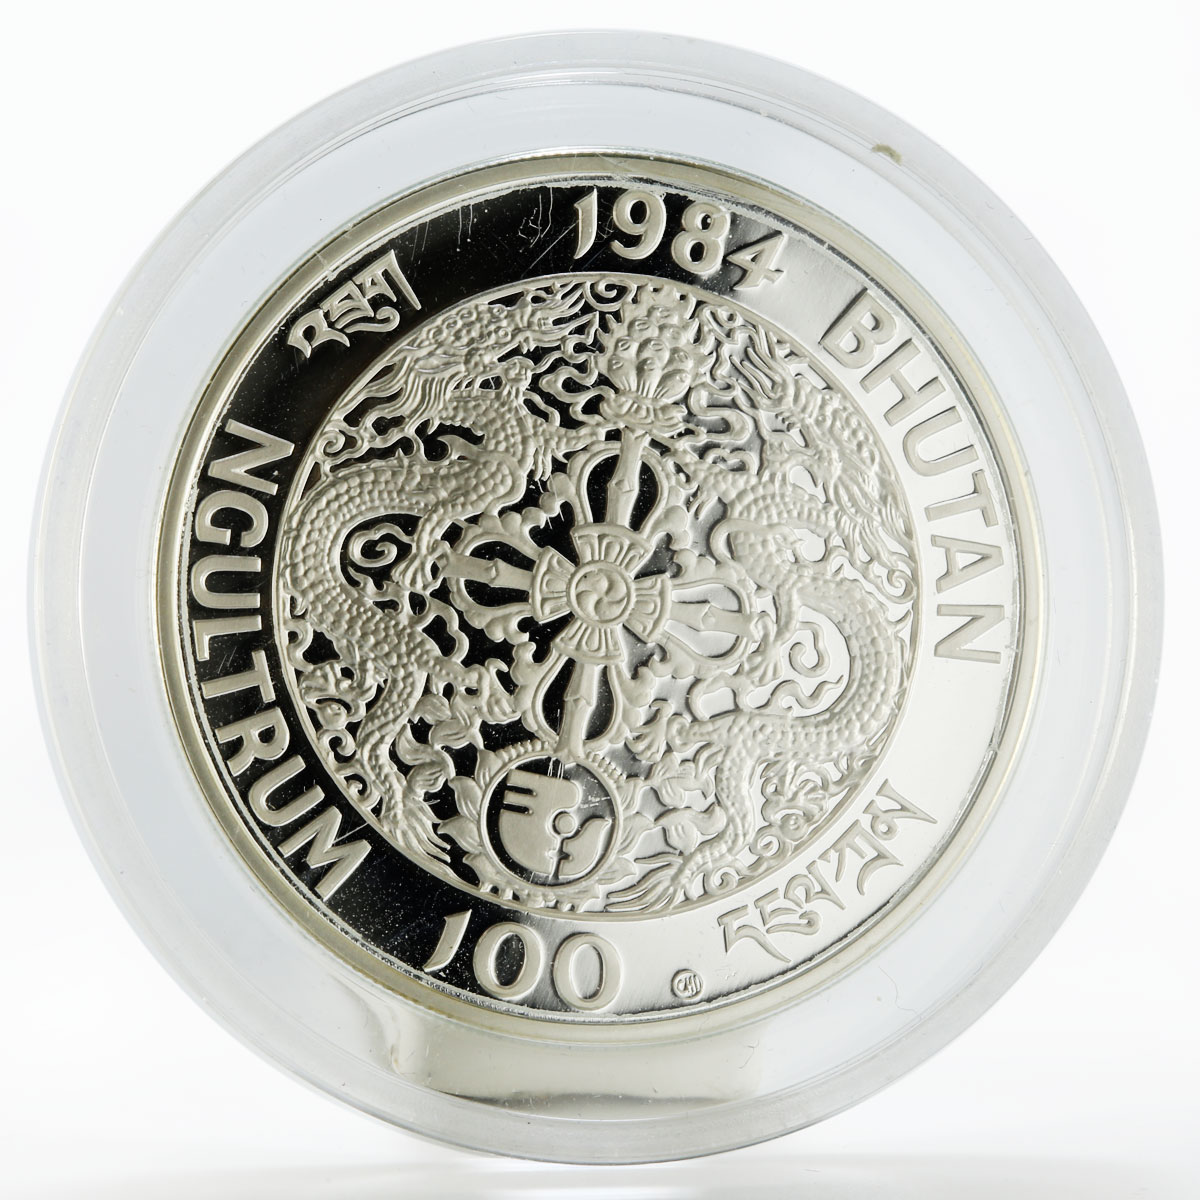 Bhutan 100 ngultrum Decade for Women proof silver coin 1984